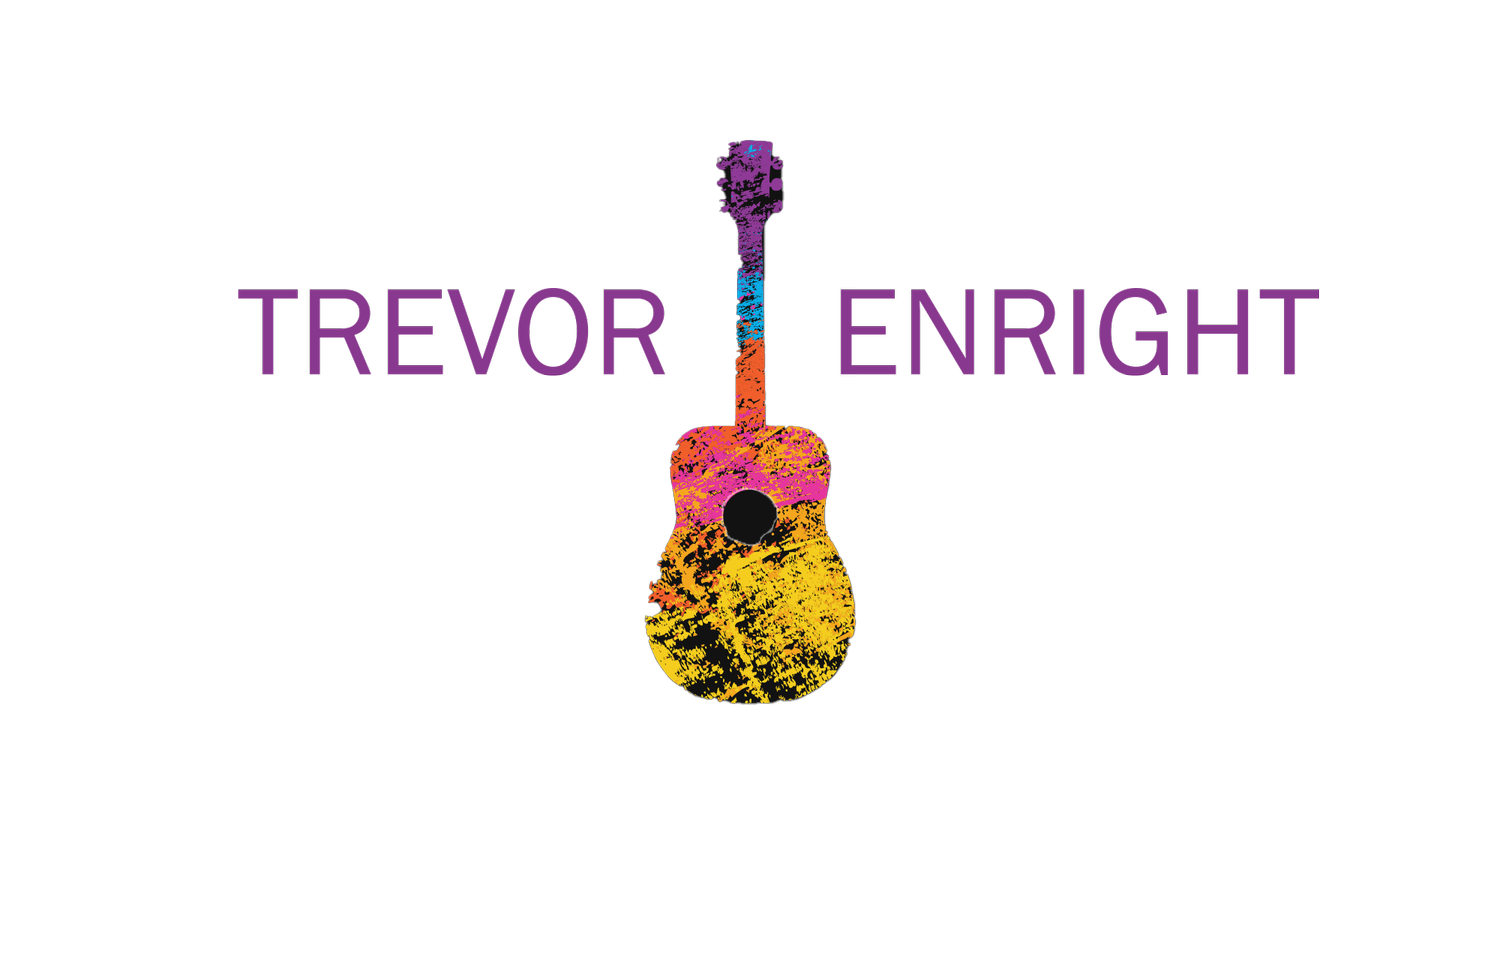 Trevor Enright 